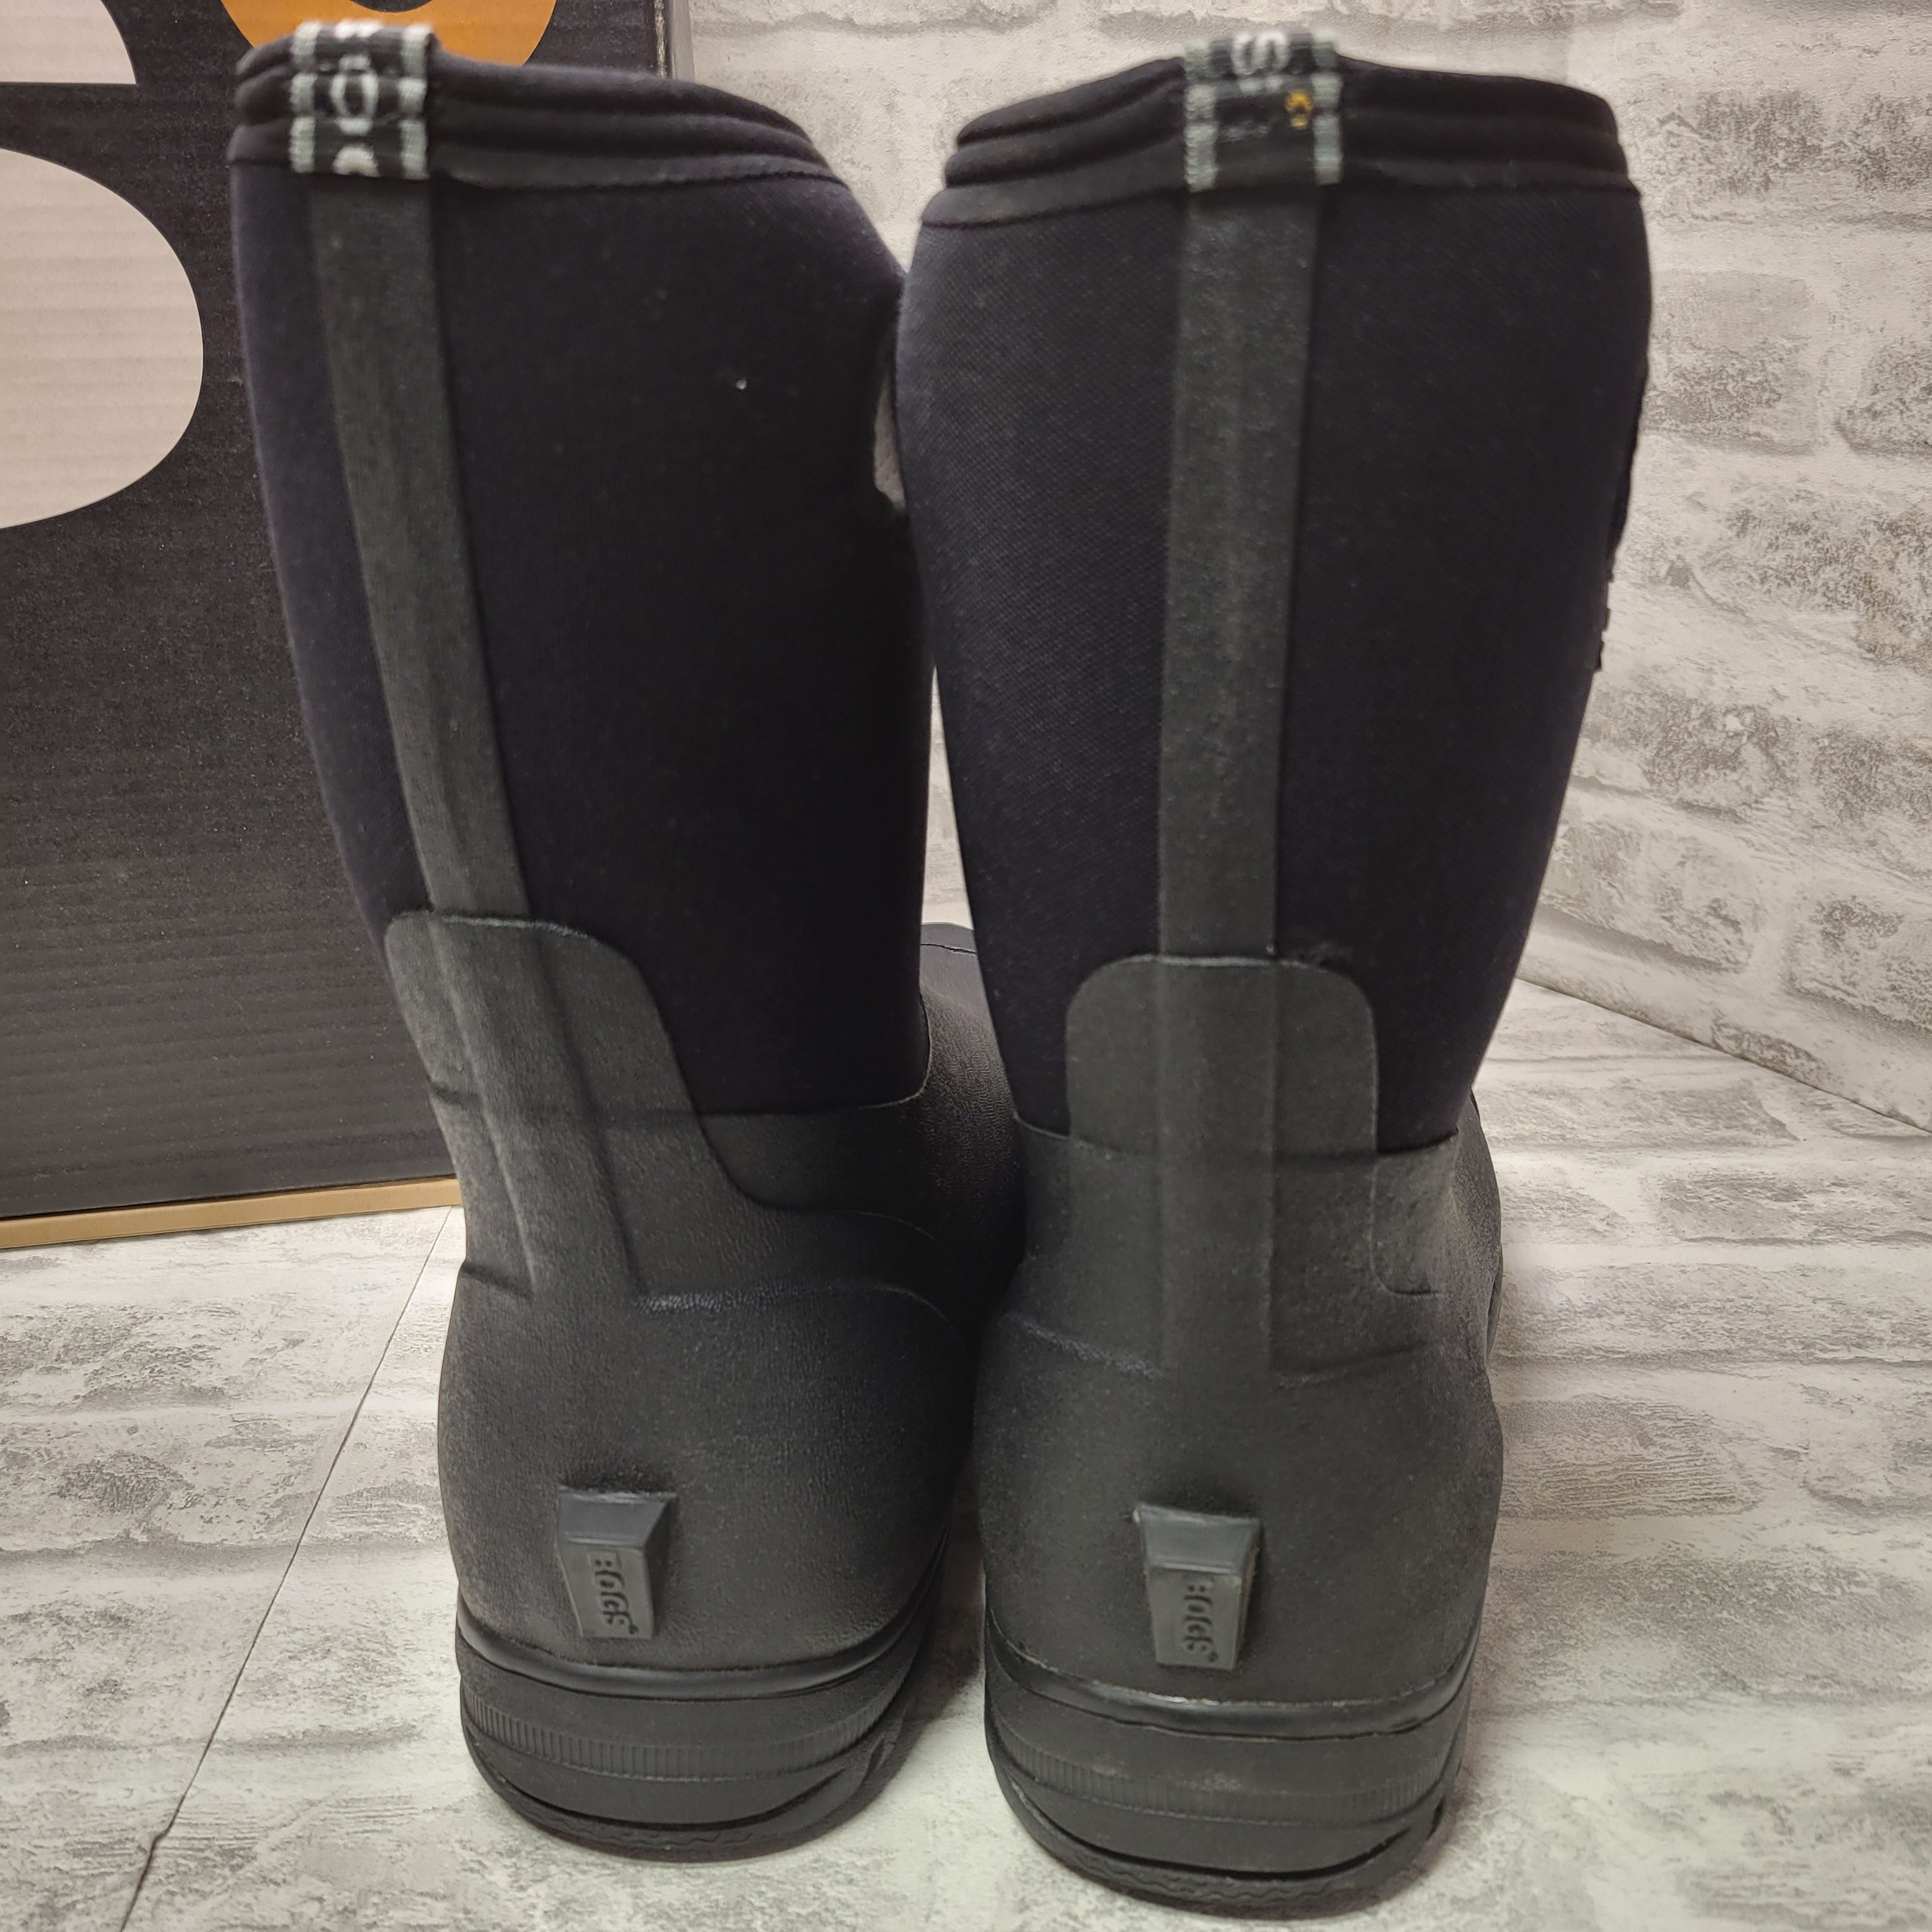 Bogs Men's Ultra Mid Insulated Waterproof Work Rain Boot, Black, 15 D(M) US (7776210747630)